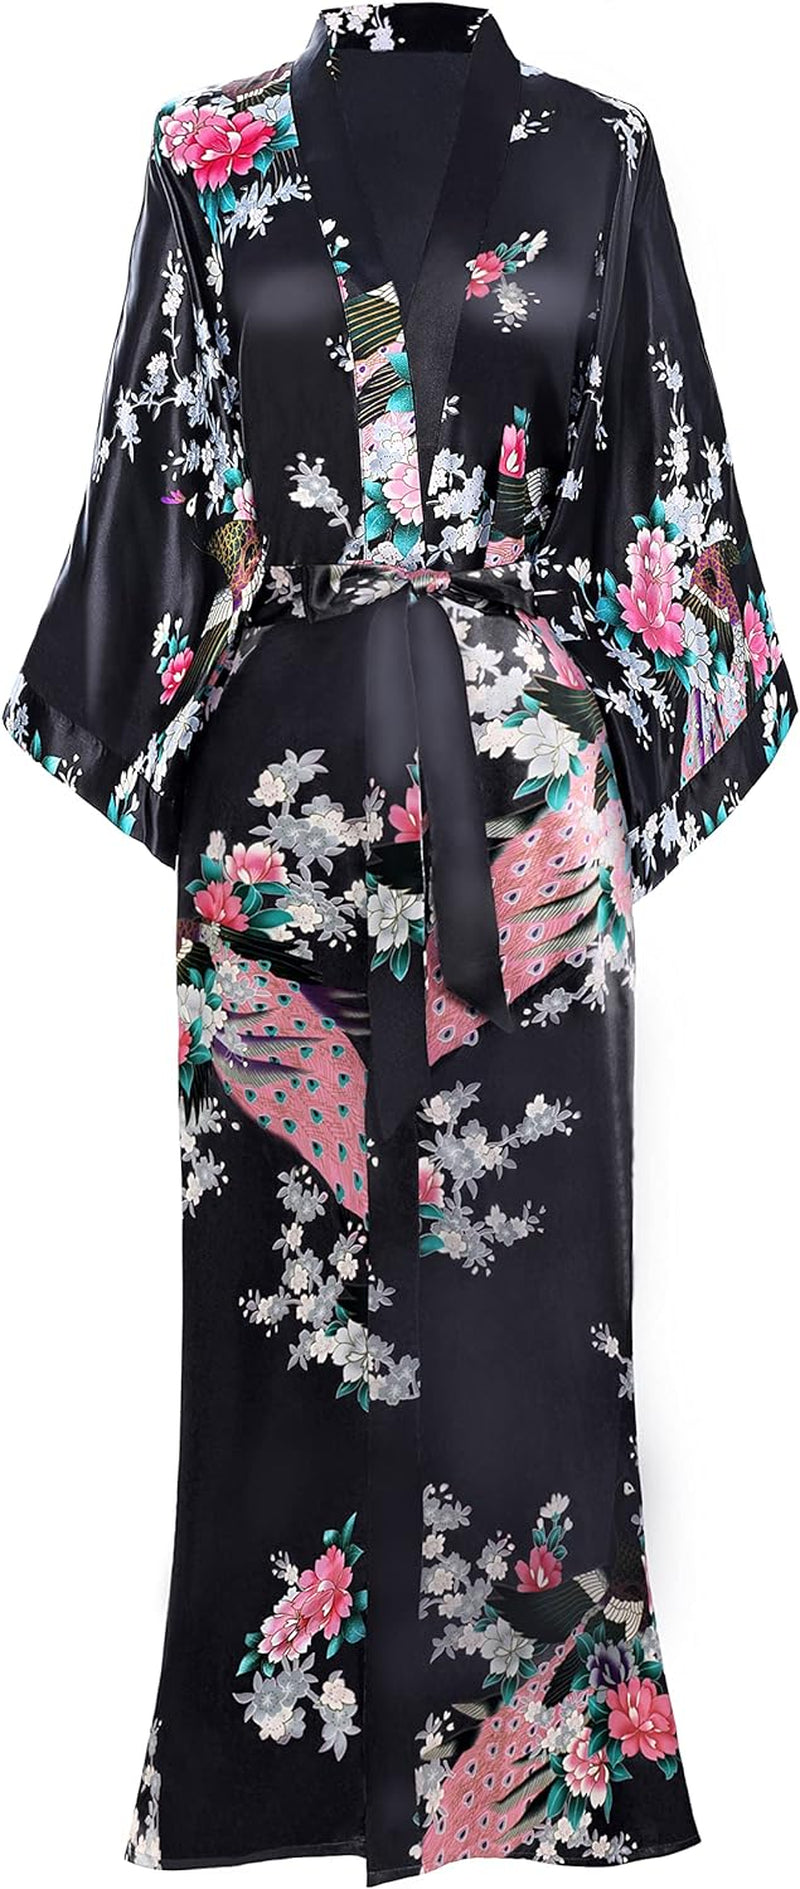 Women'S Kimono Robe Long Satin Robes with Peacock and Blossoms Printed Kimono Nightgown